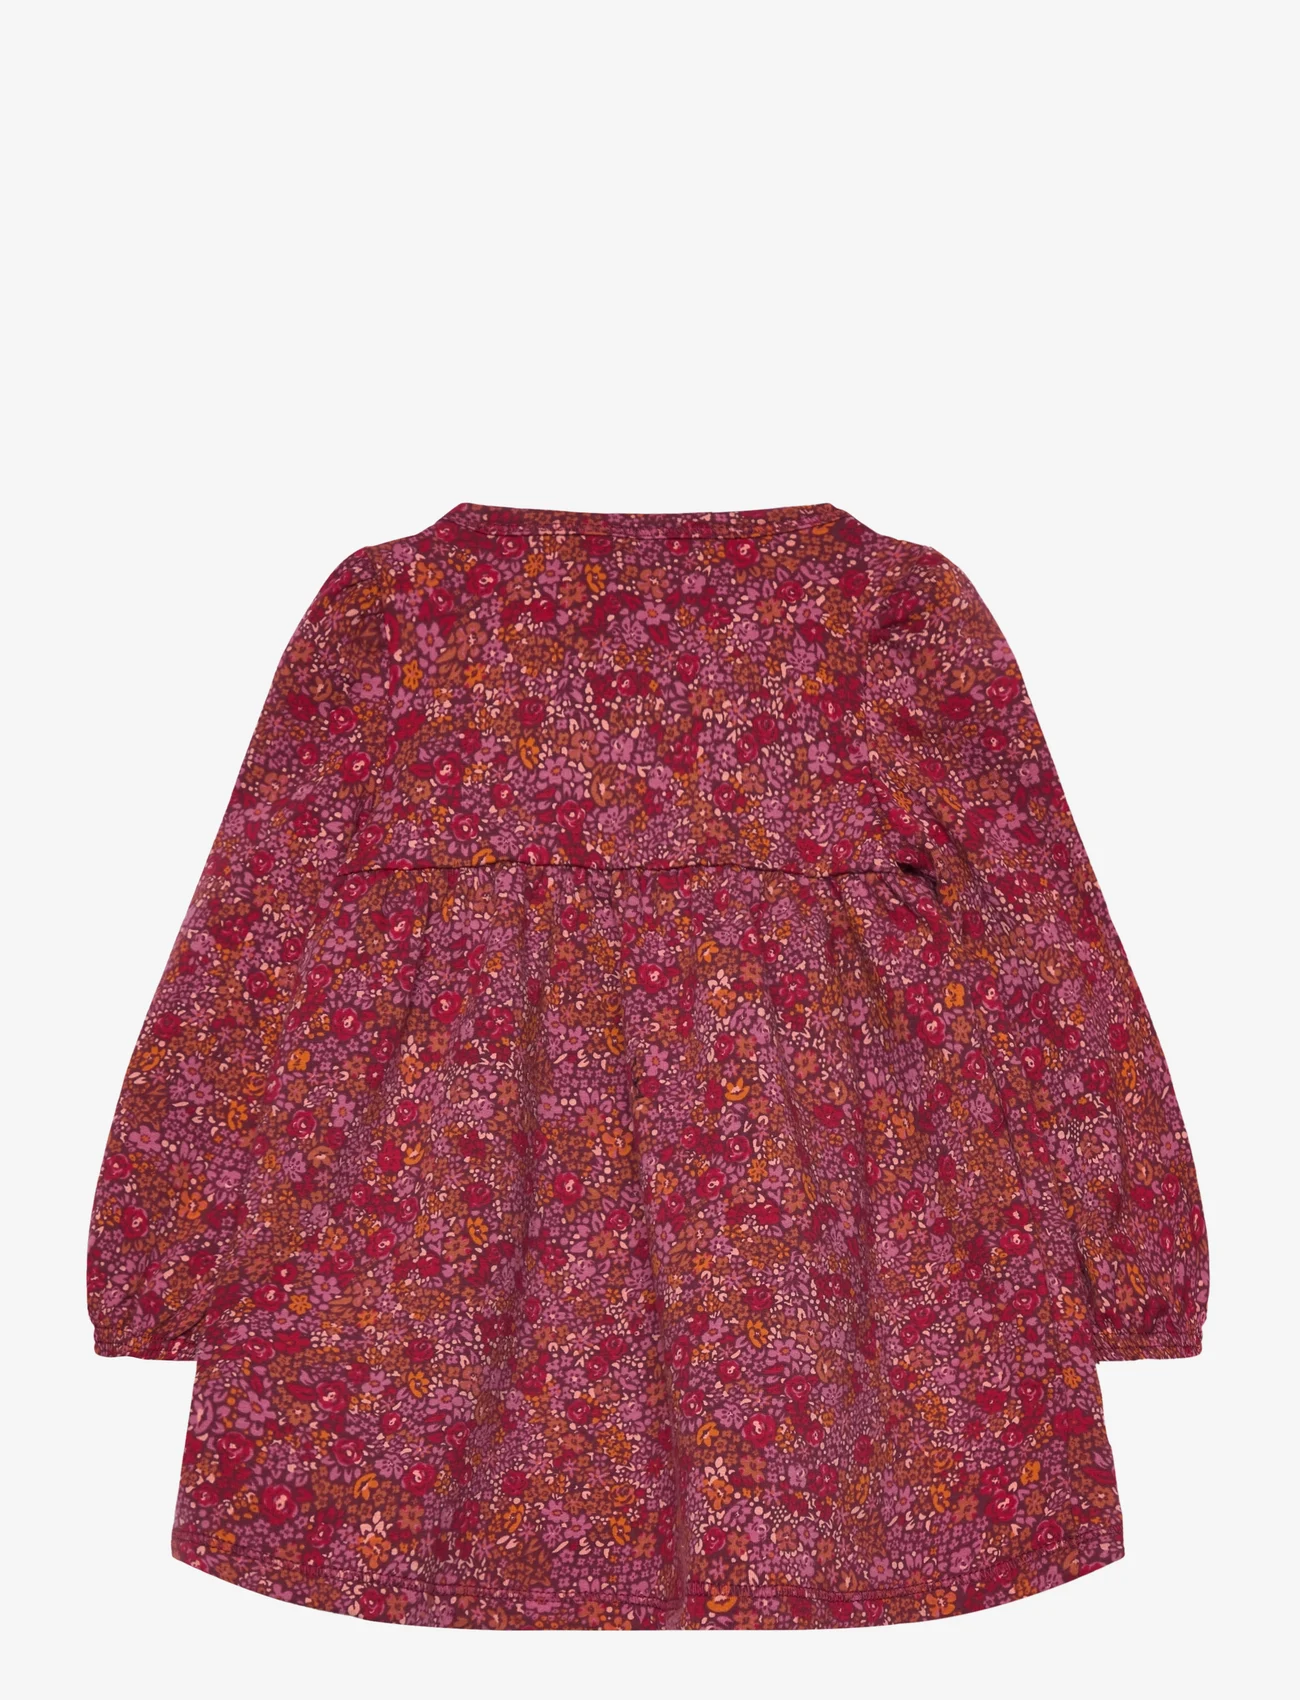 Müsli by Green Cotton - Petit blossom l/s dress baby - casual jurken met lange mouwen - fig/boysenberry/berry red - 1